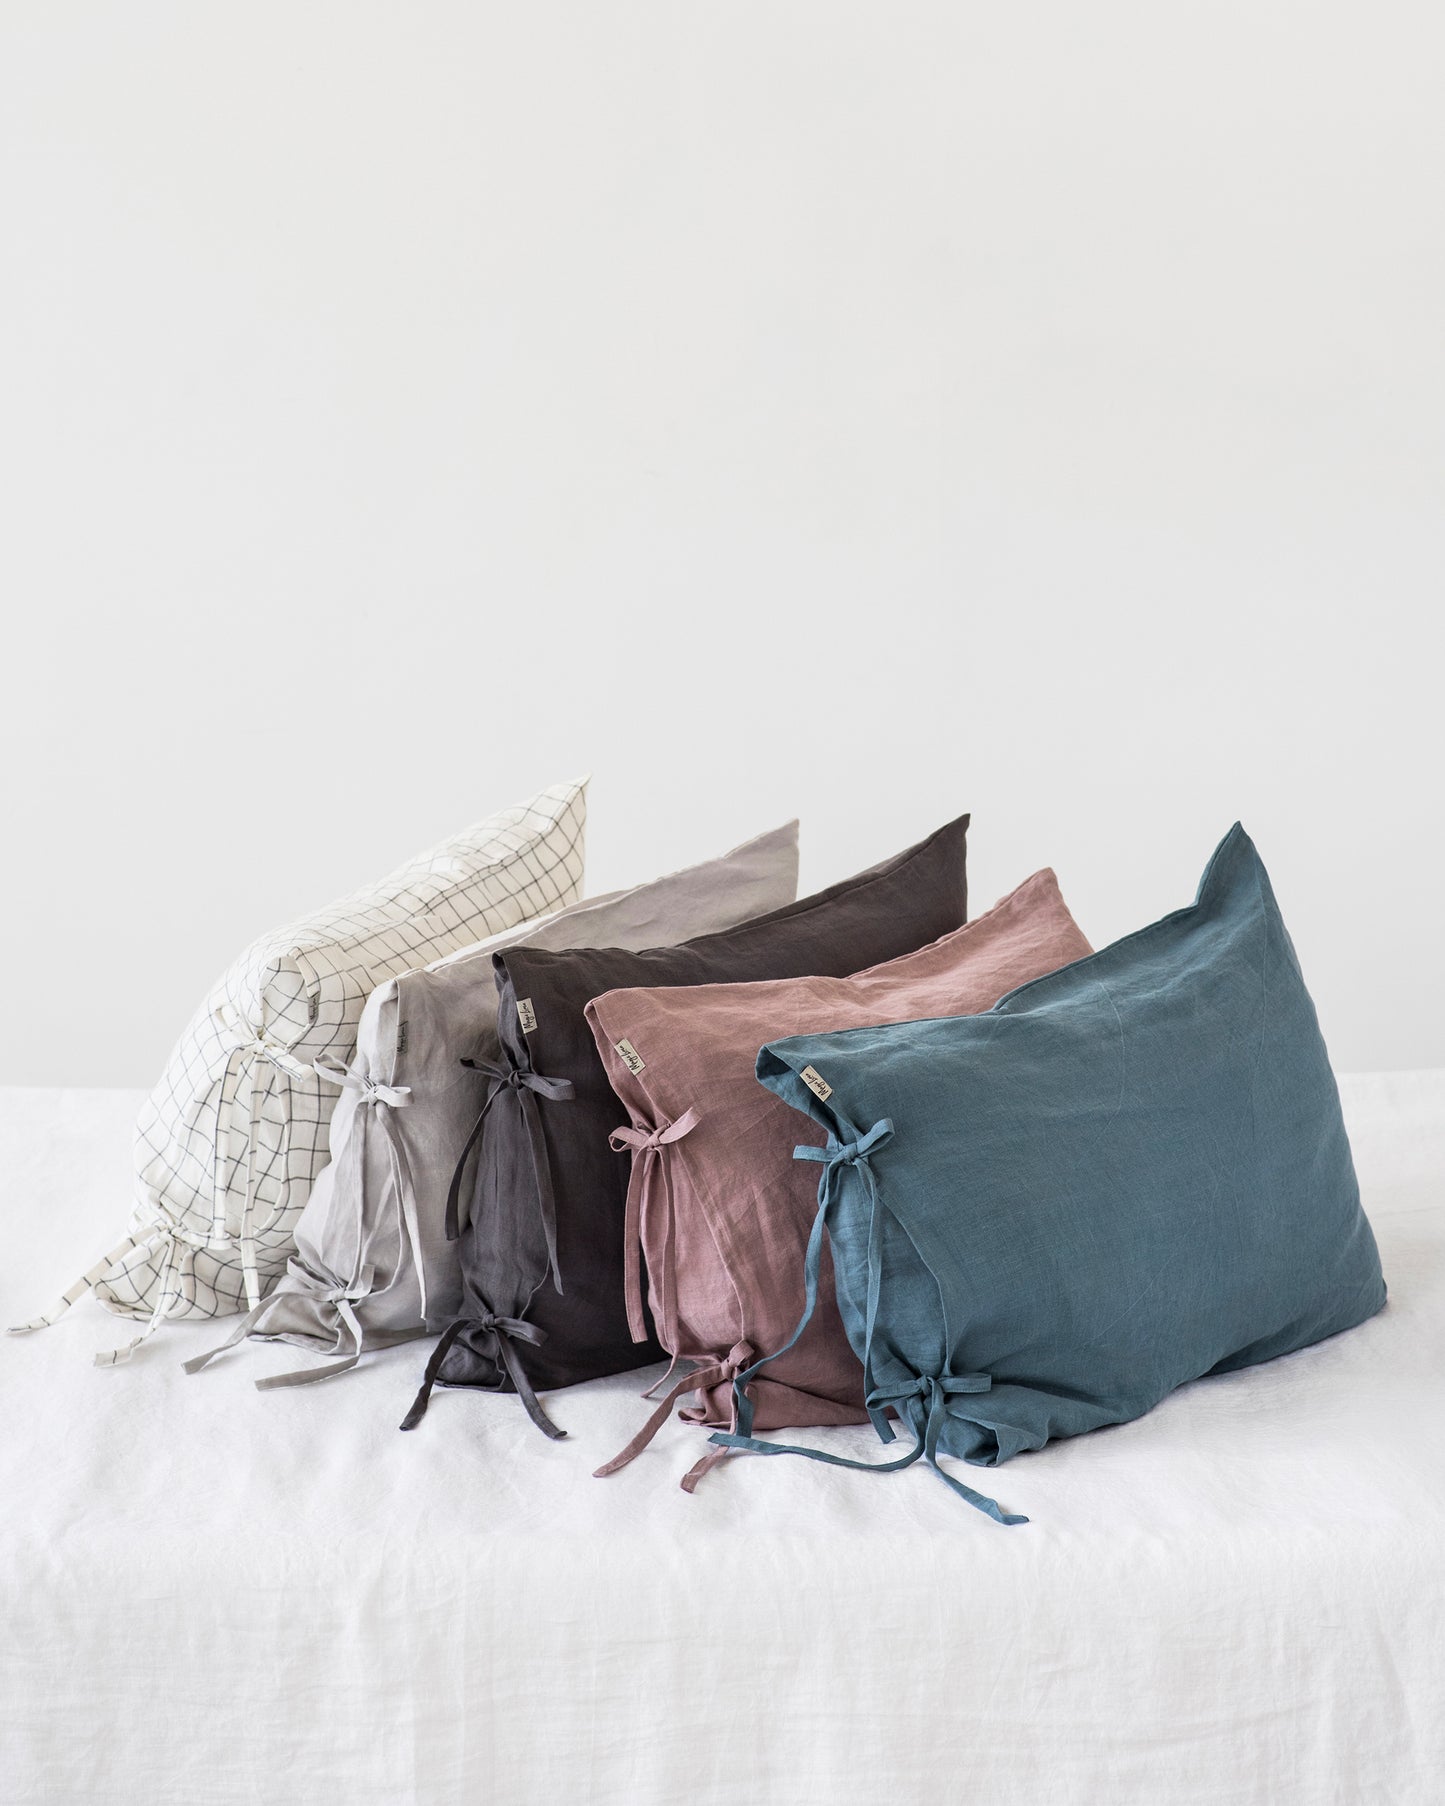 Linen pillowcase with ties in Natural linen - MagicLinen